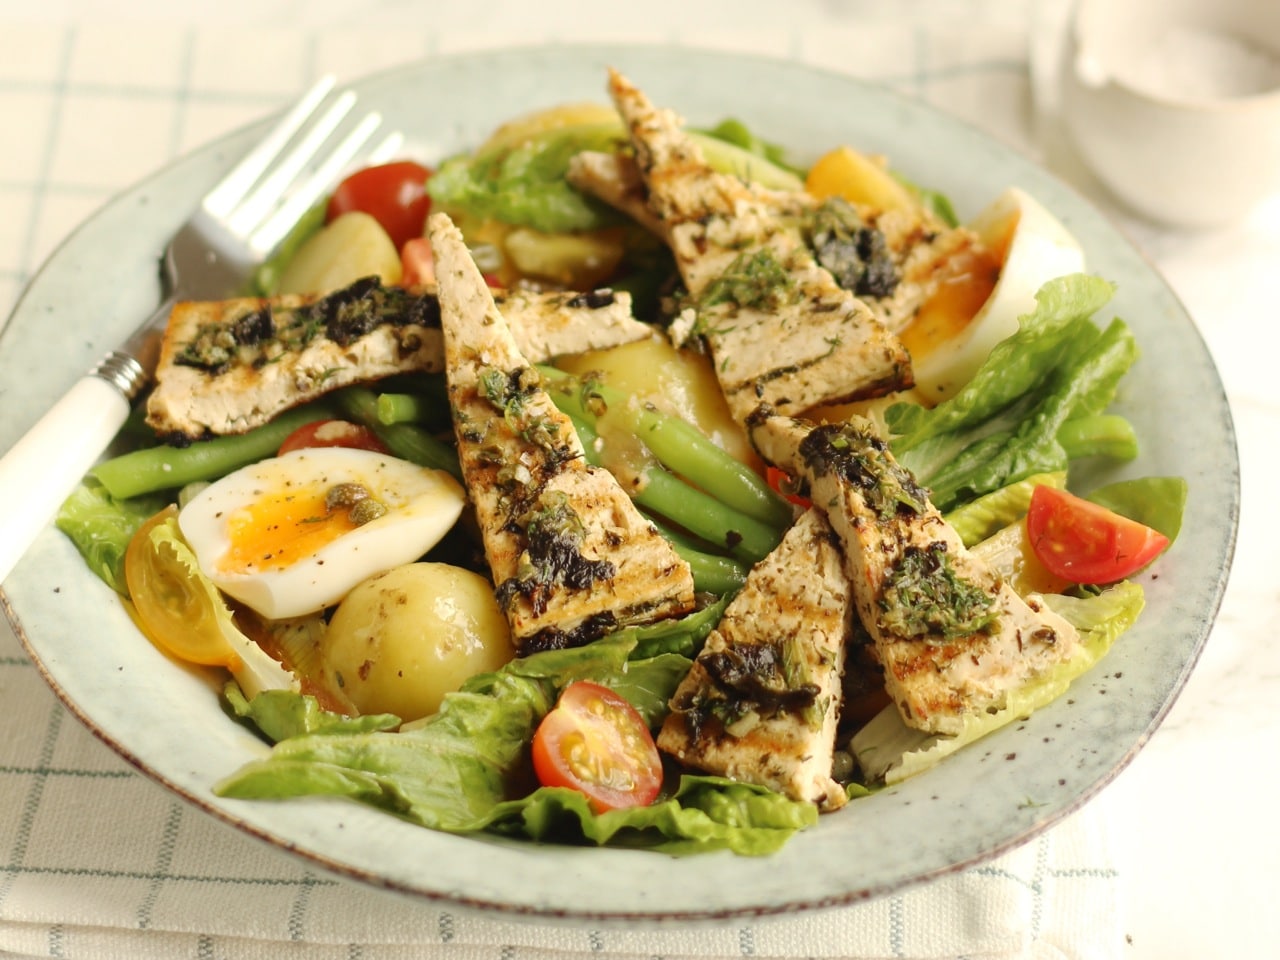 Tofu Nicoise Salad, a vegetarian or vegan take on this French Salad | Natural Kitchen Adventures 